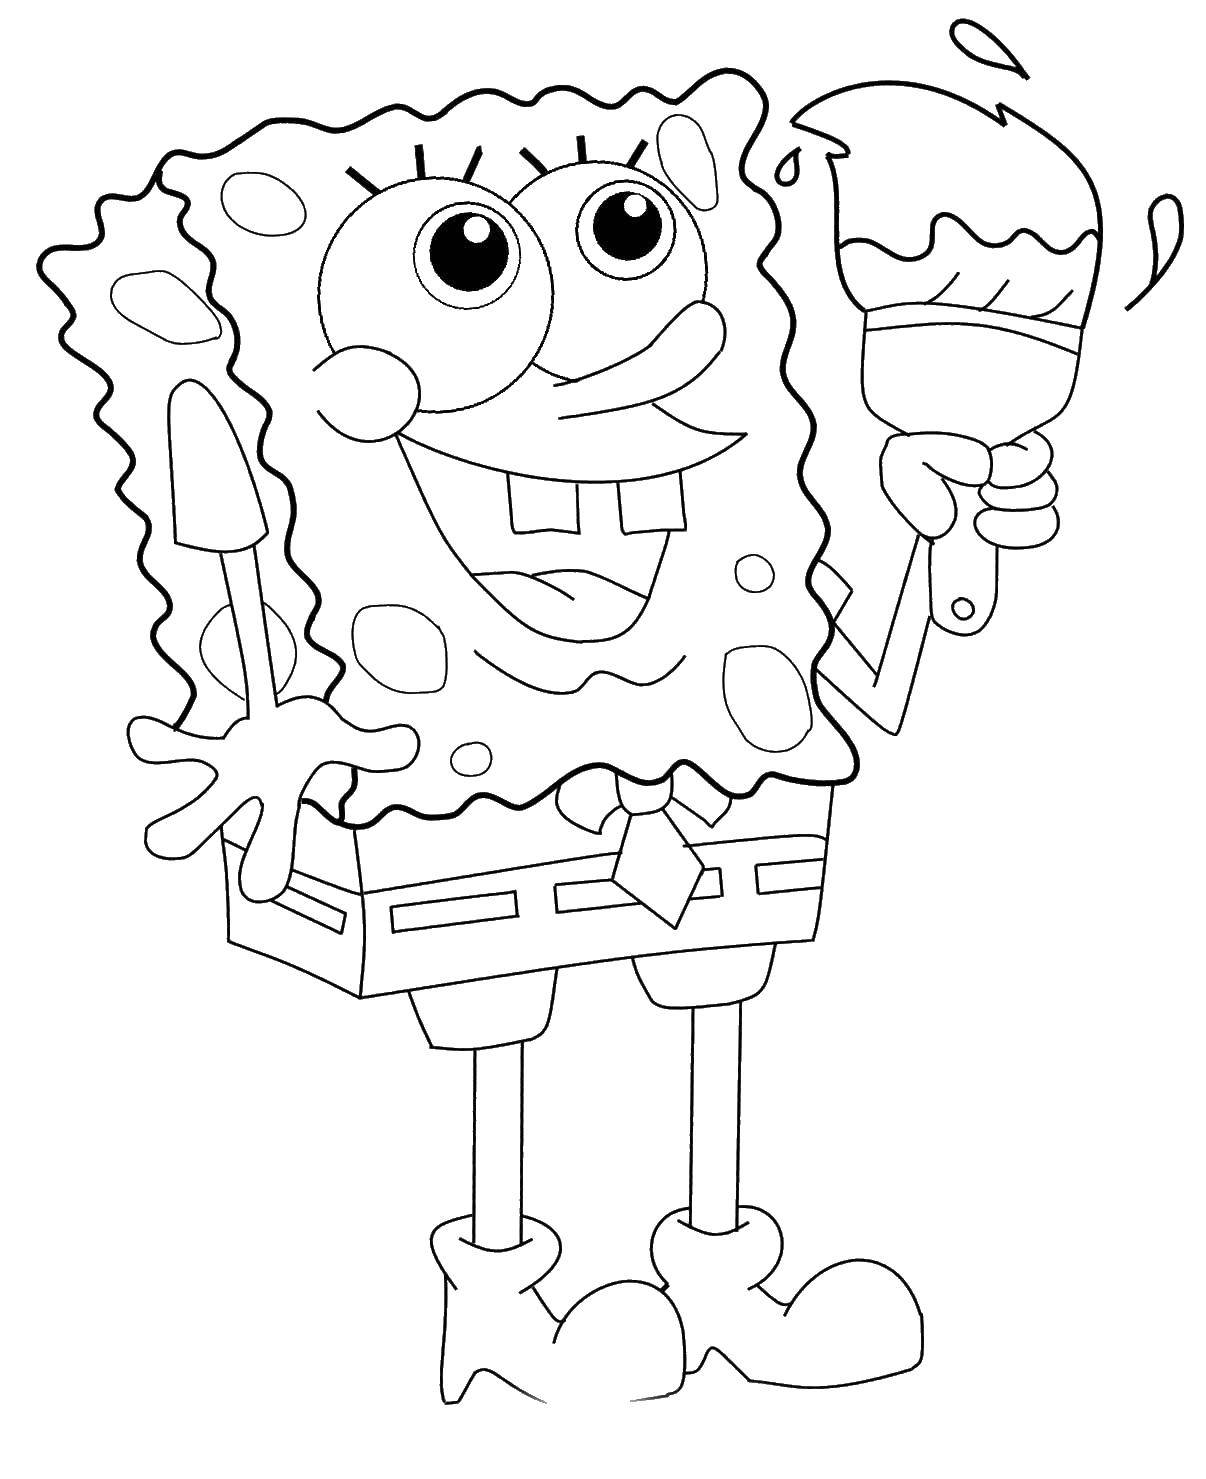 Coloring Spongebob and tassel. Category Spongebob. Tags:  sponge Bob, tassel.